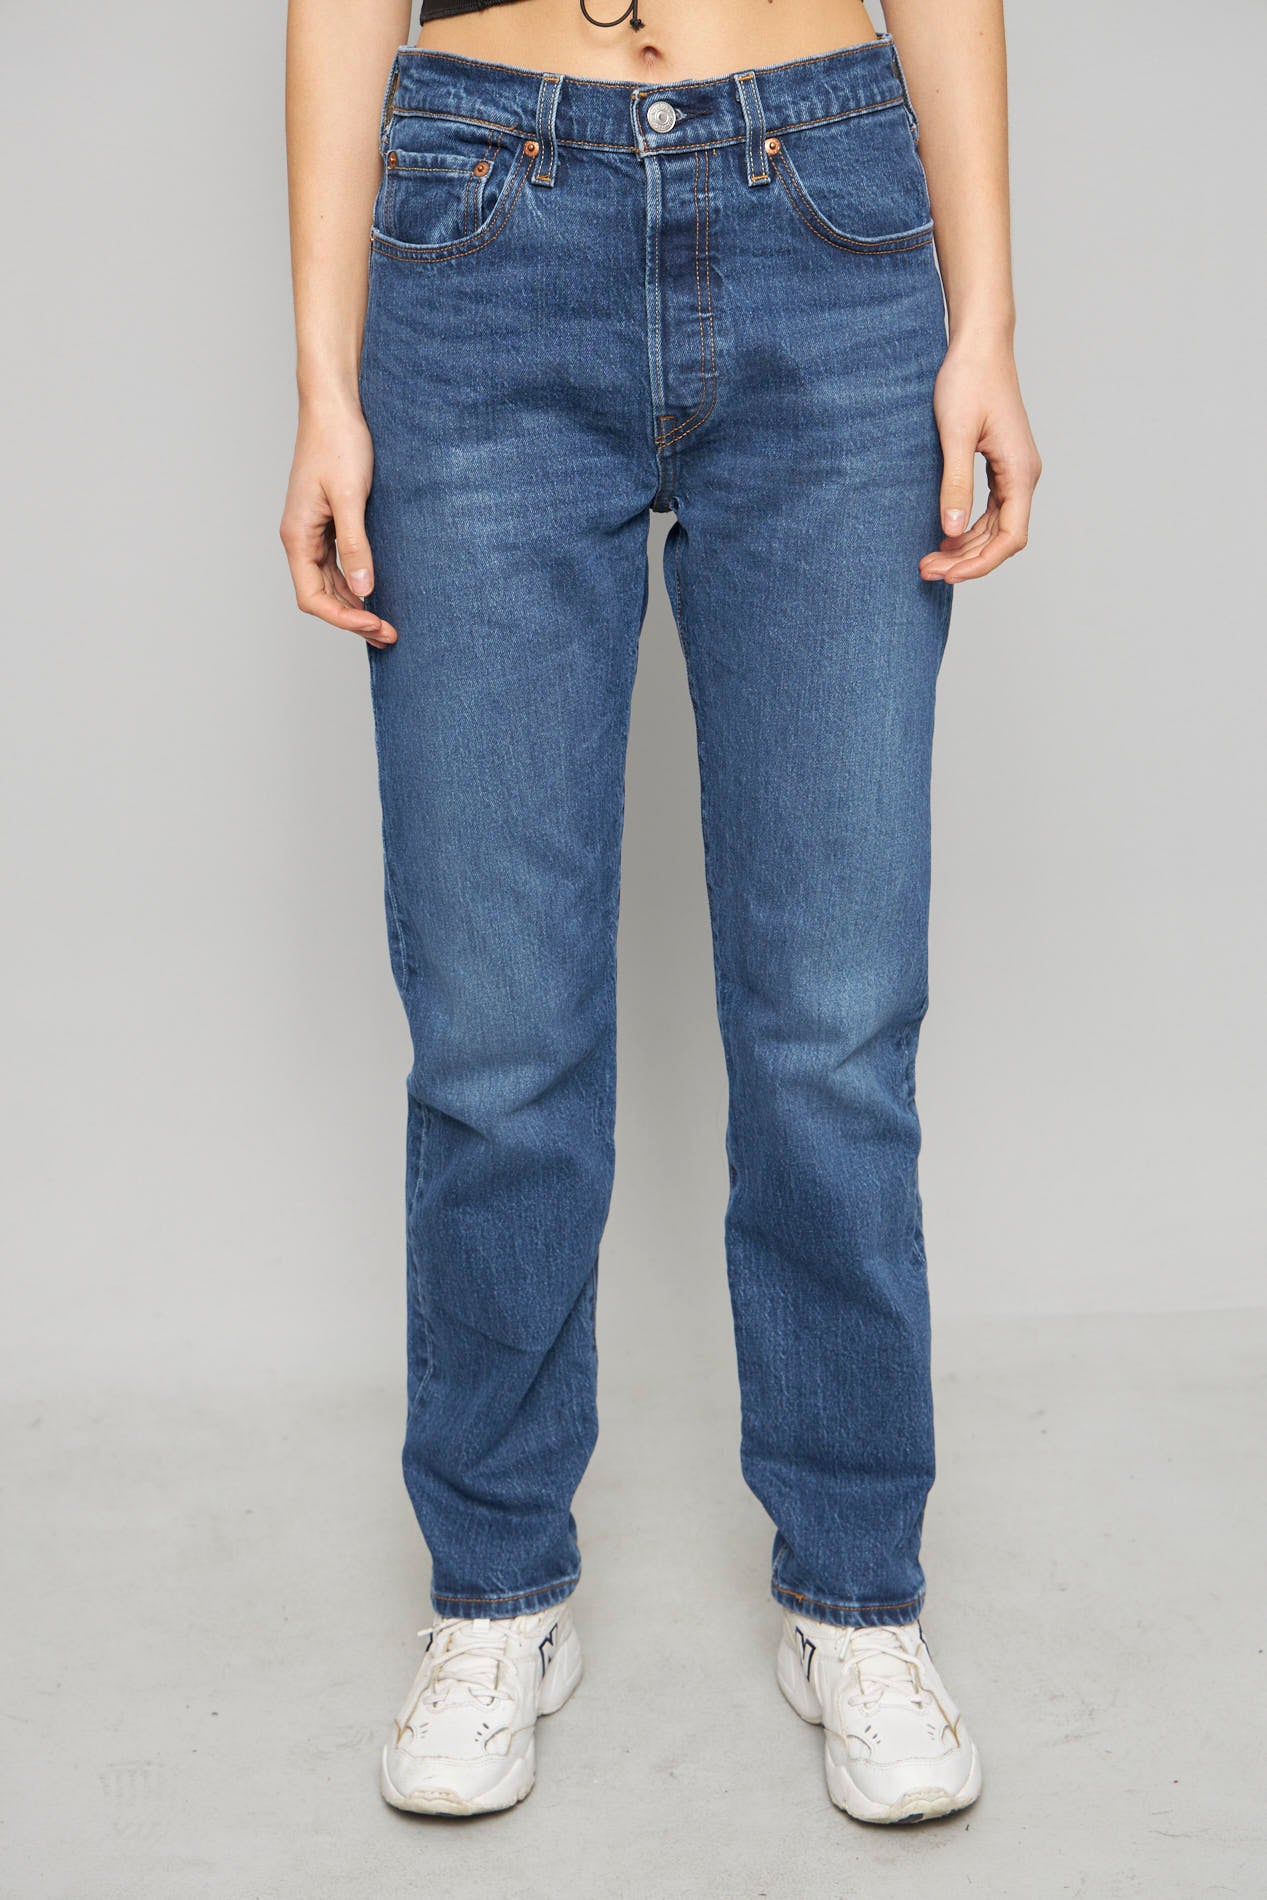 Jeans casual  azul levis talla 38 543